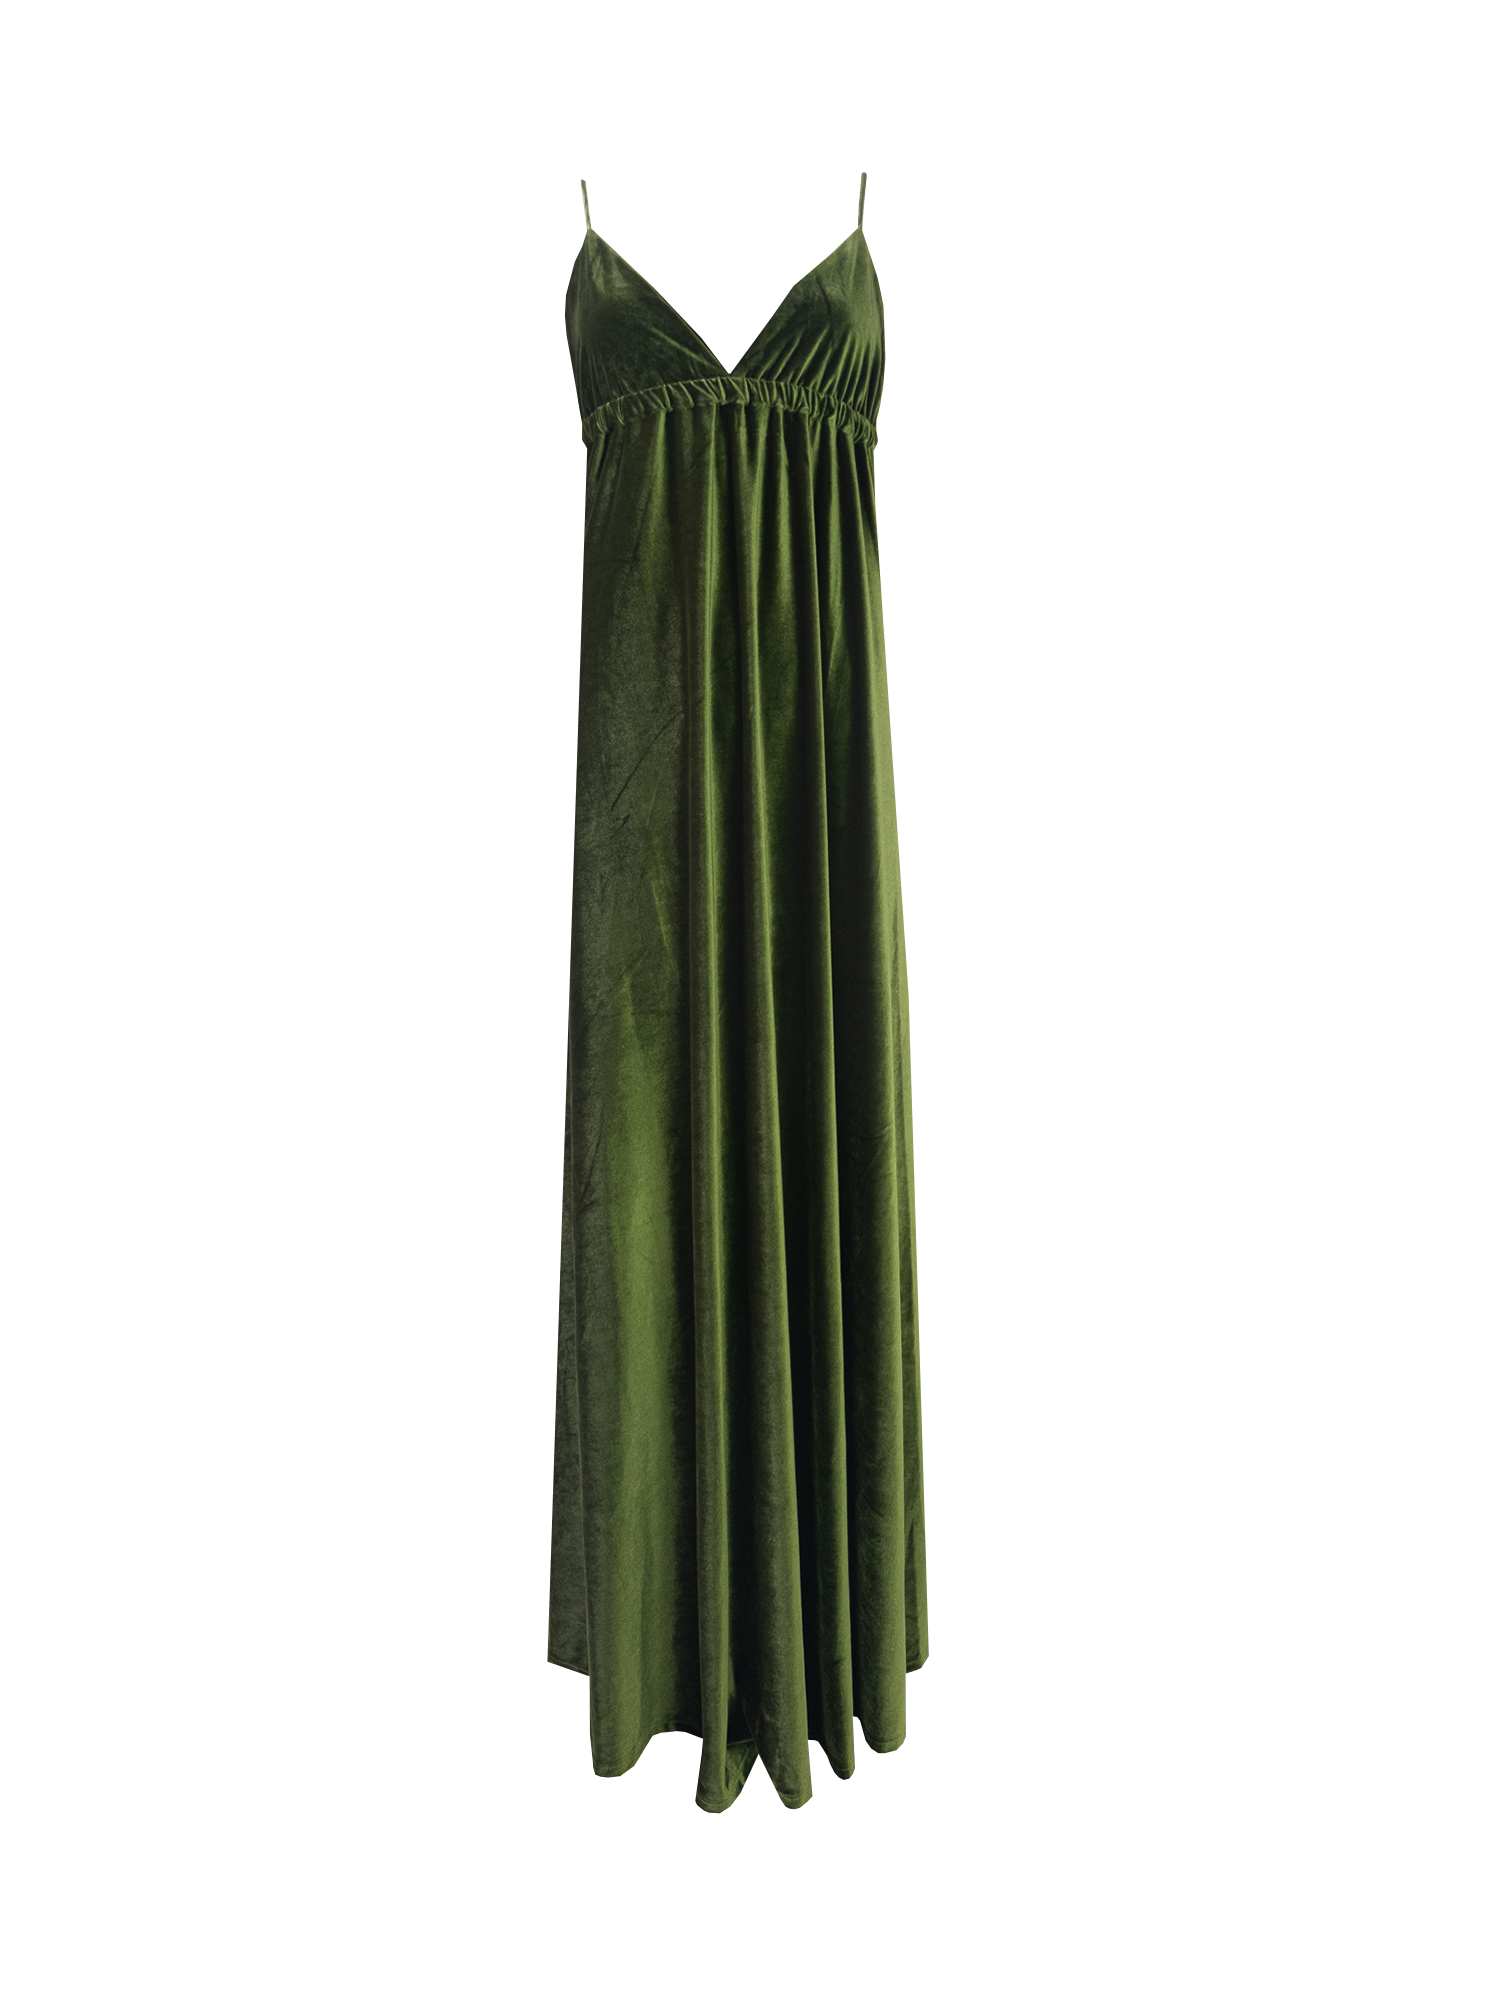 MICOL - long green chenille dress